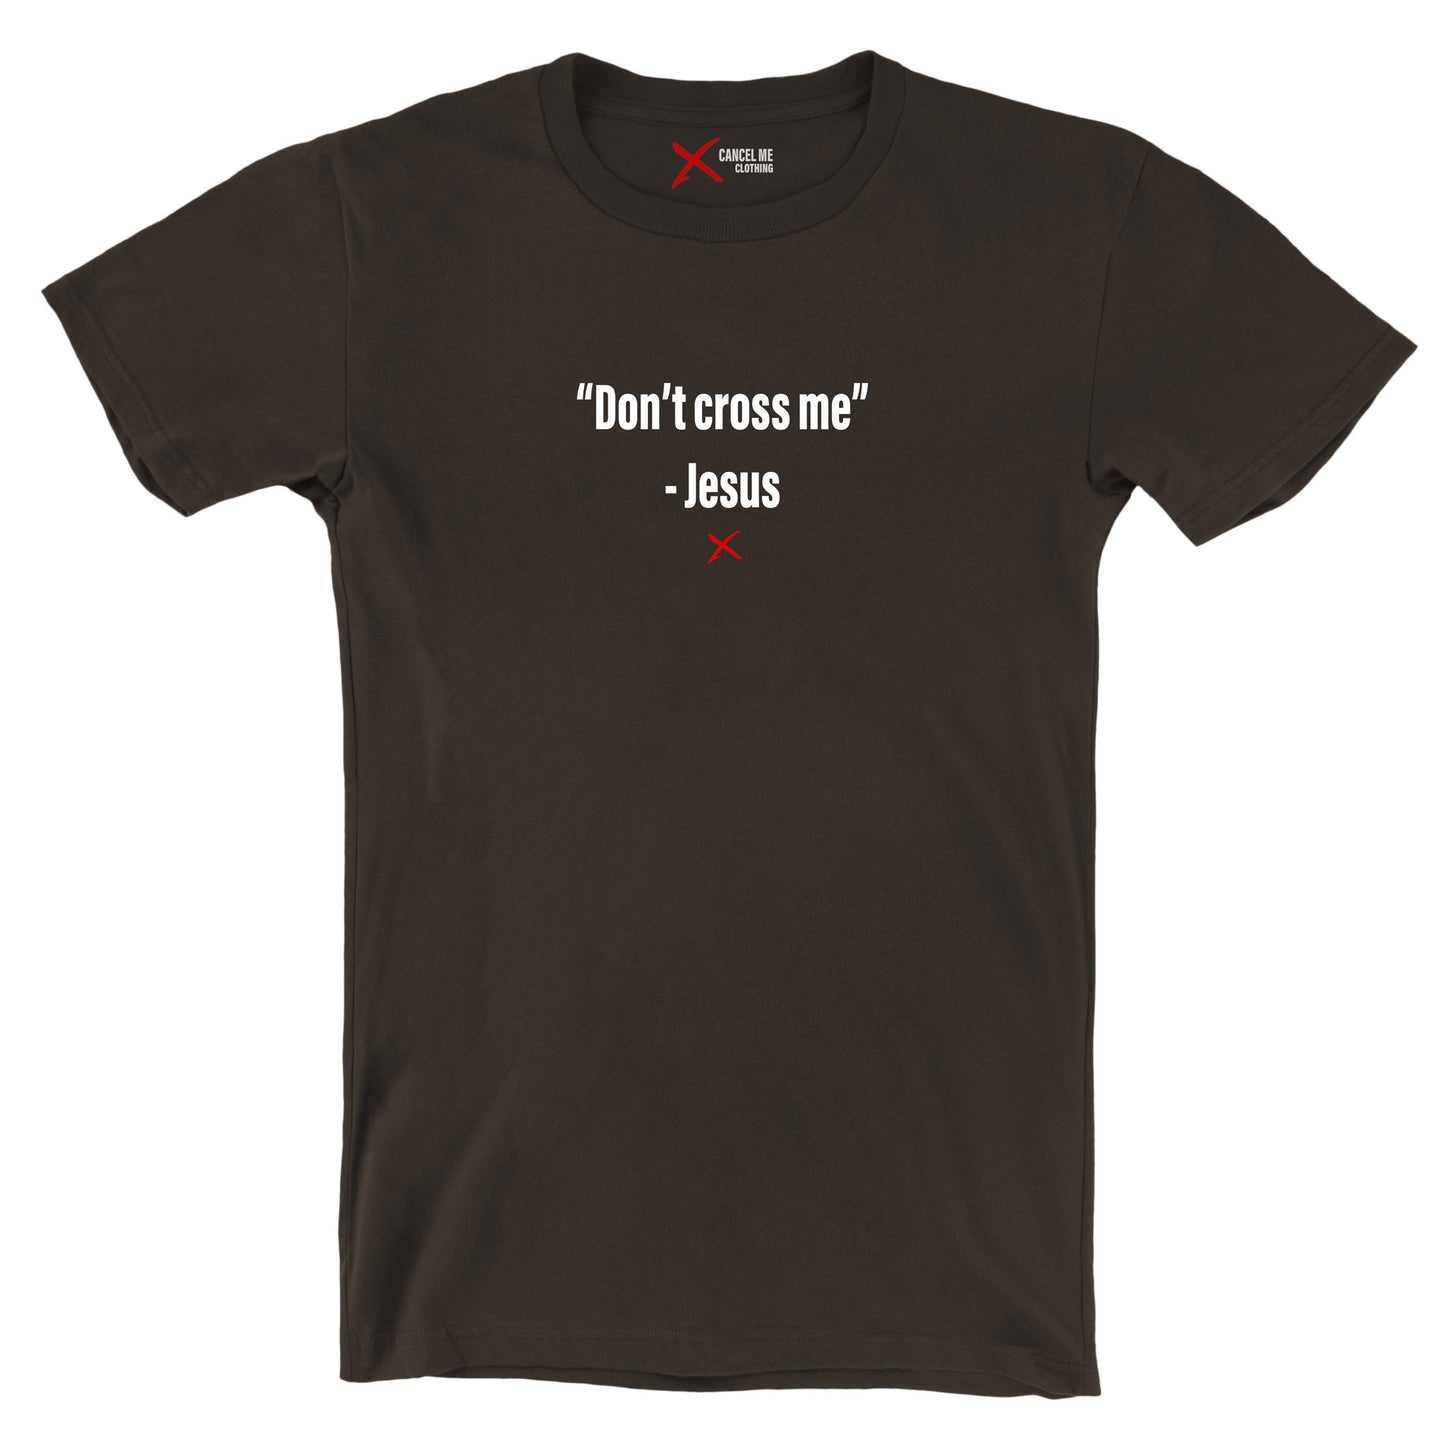 "Don't cross me" - Jesus - Shirt